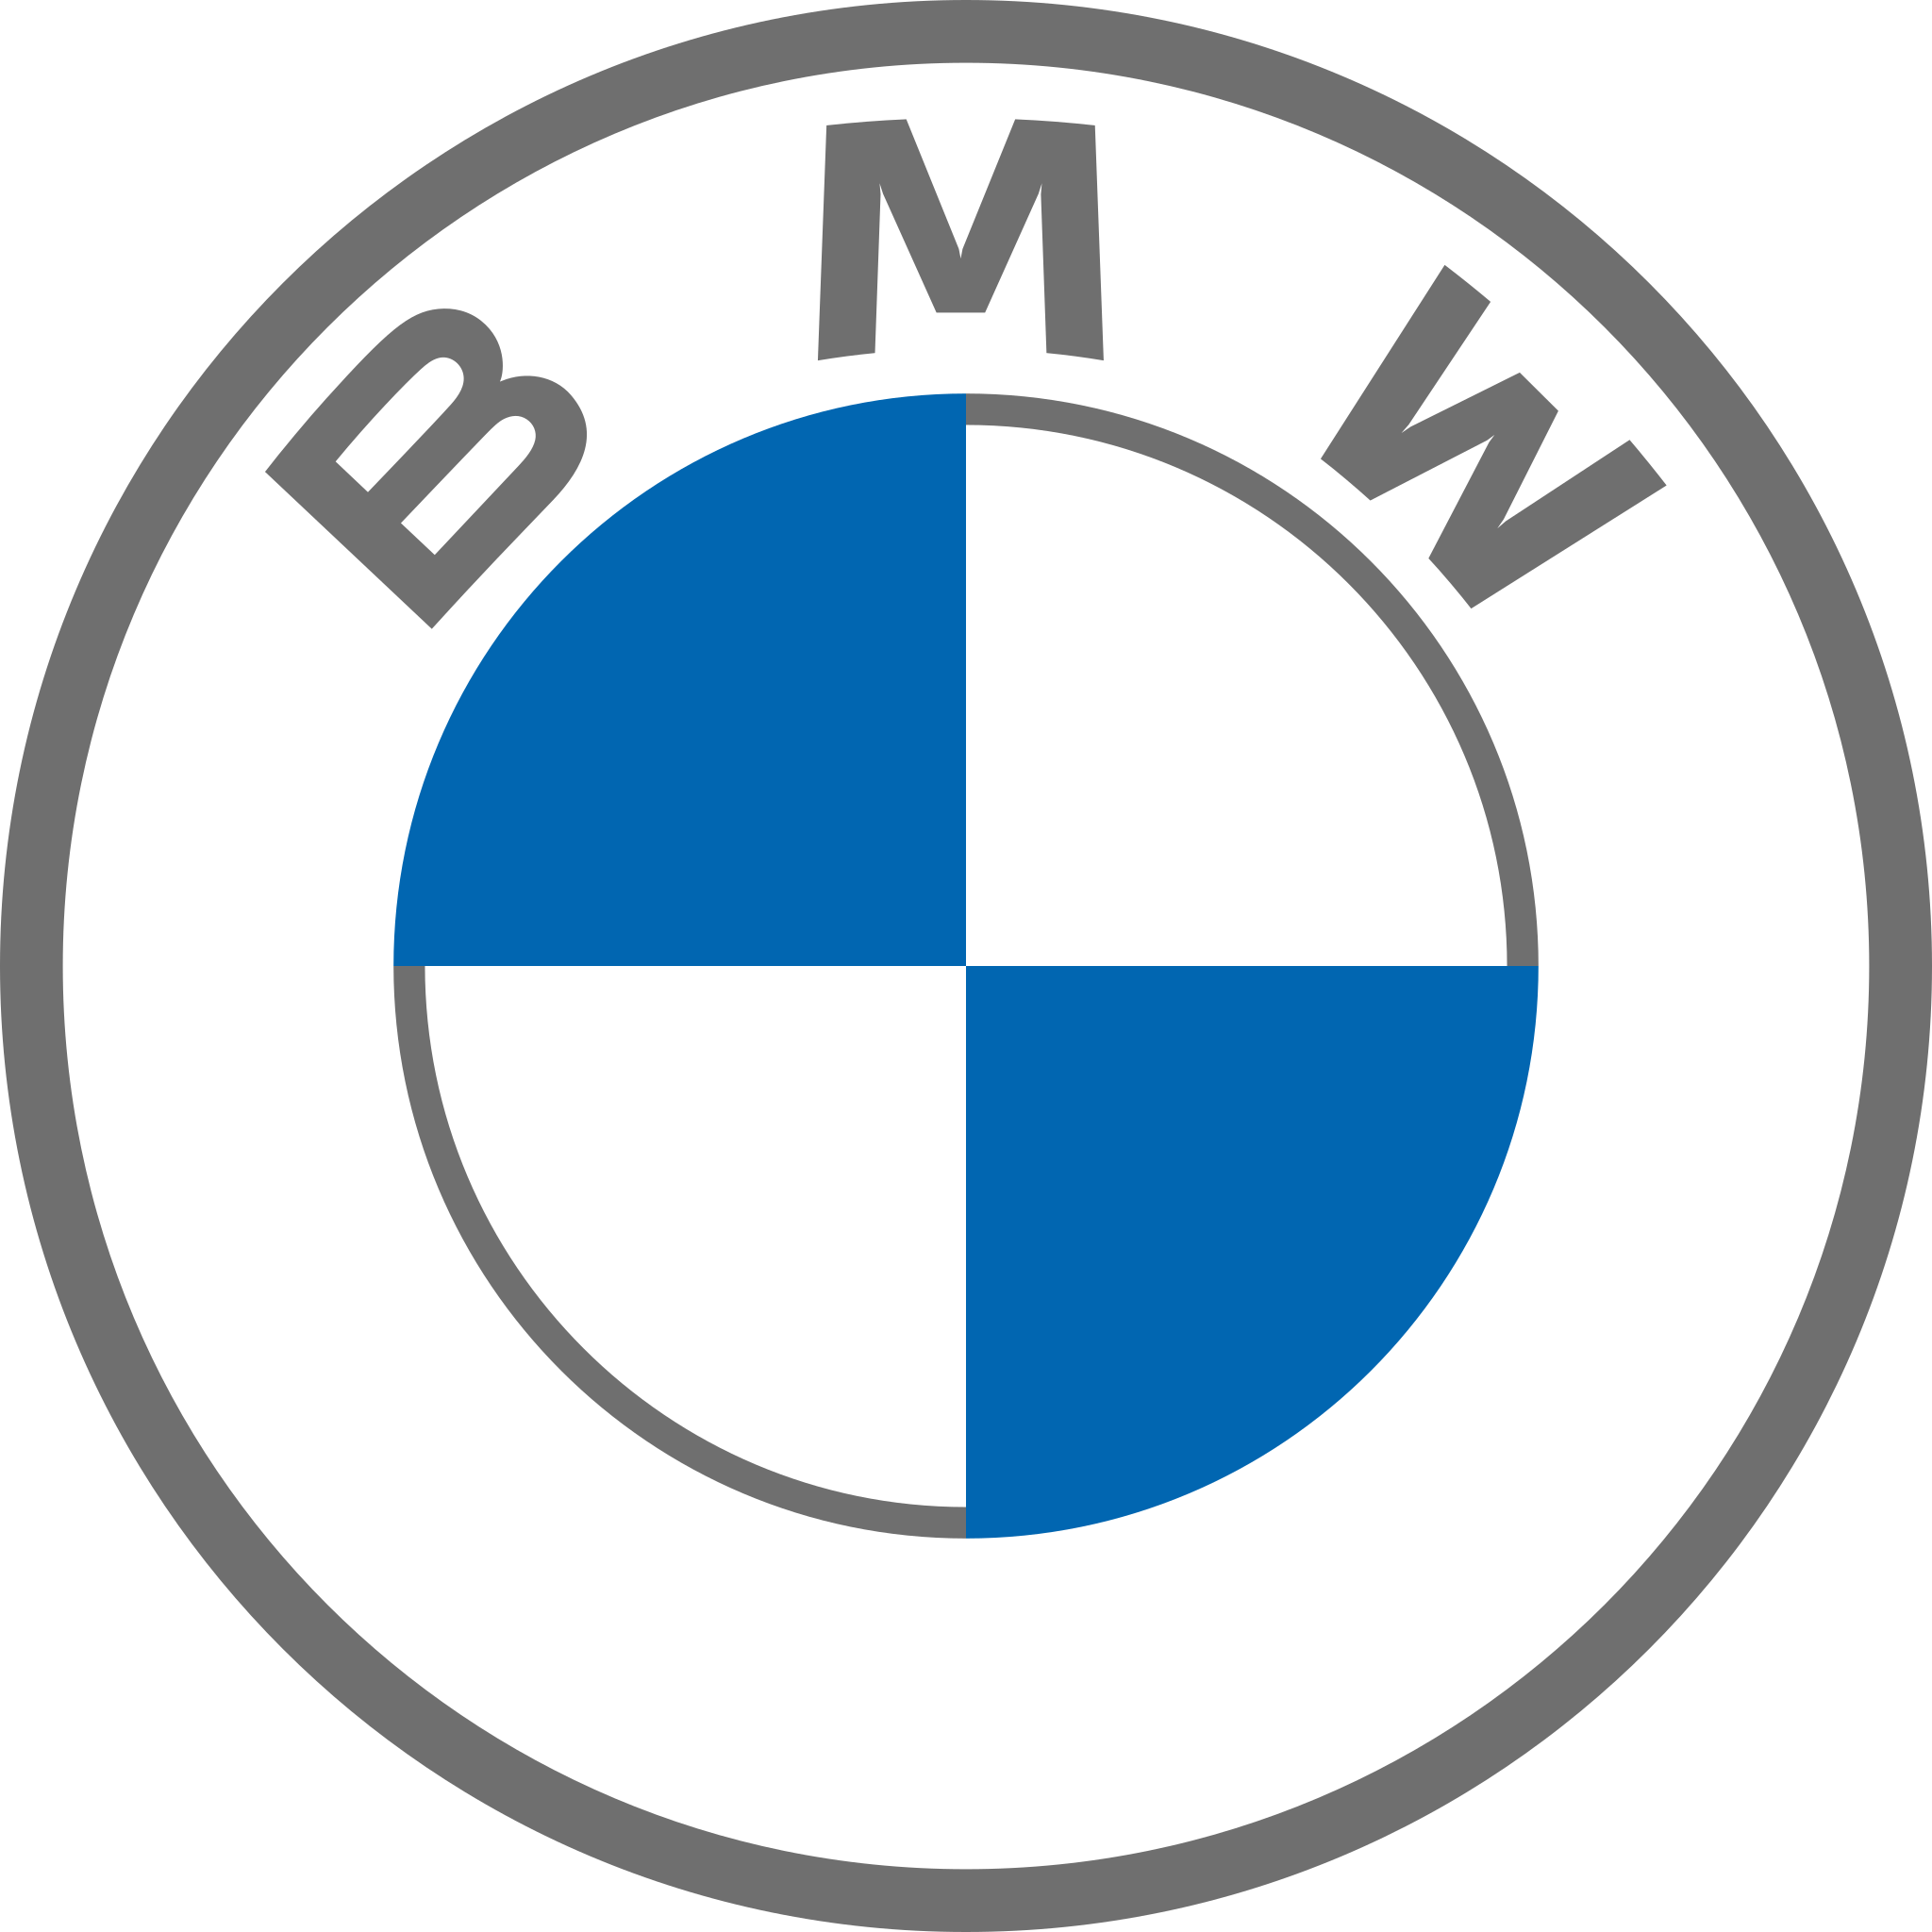 BMW SÀI GÒN